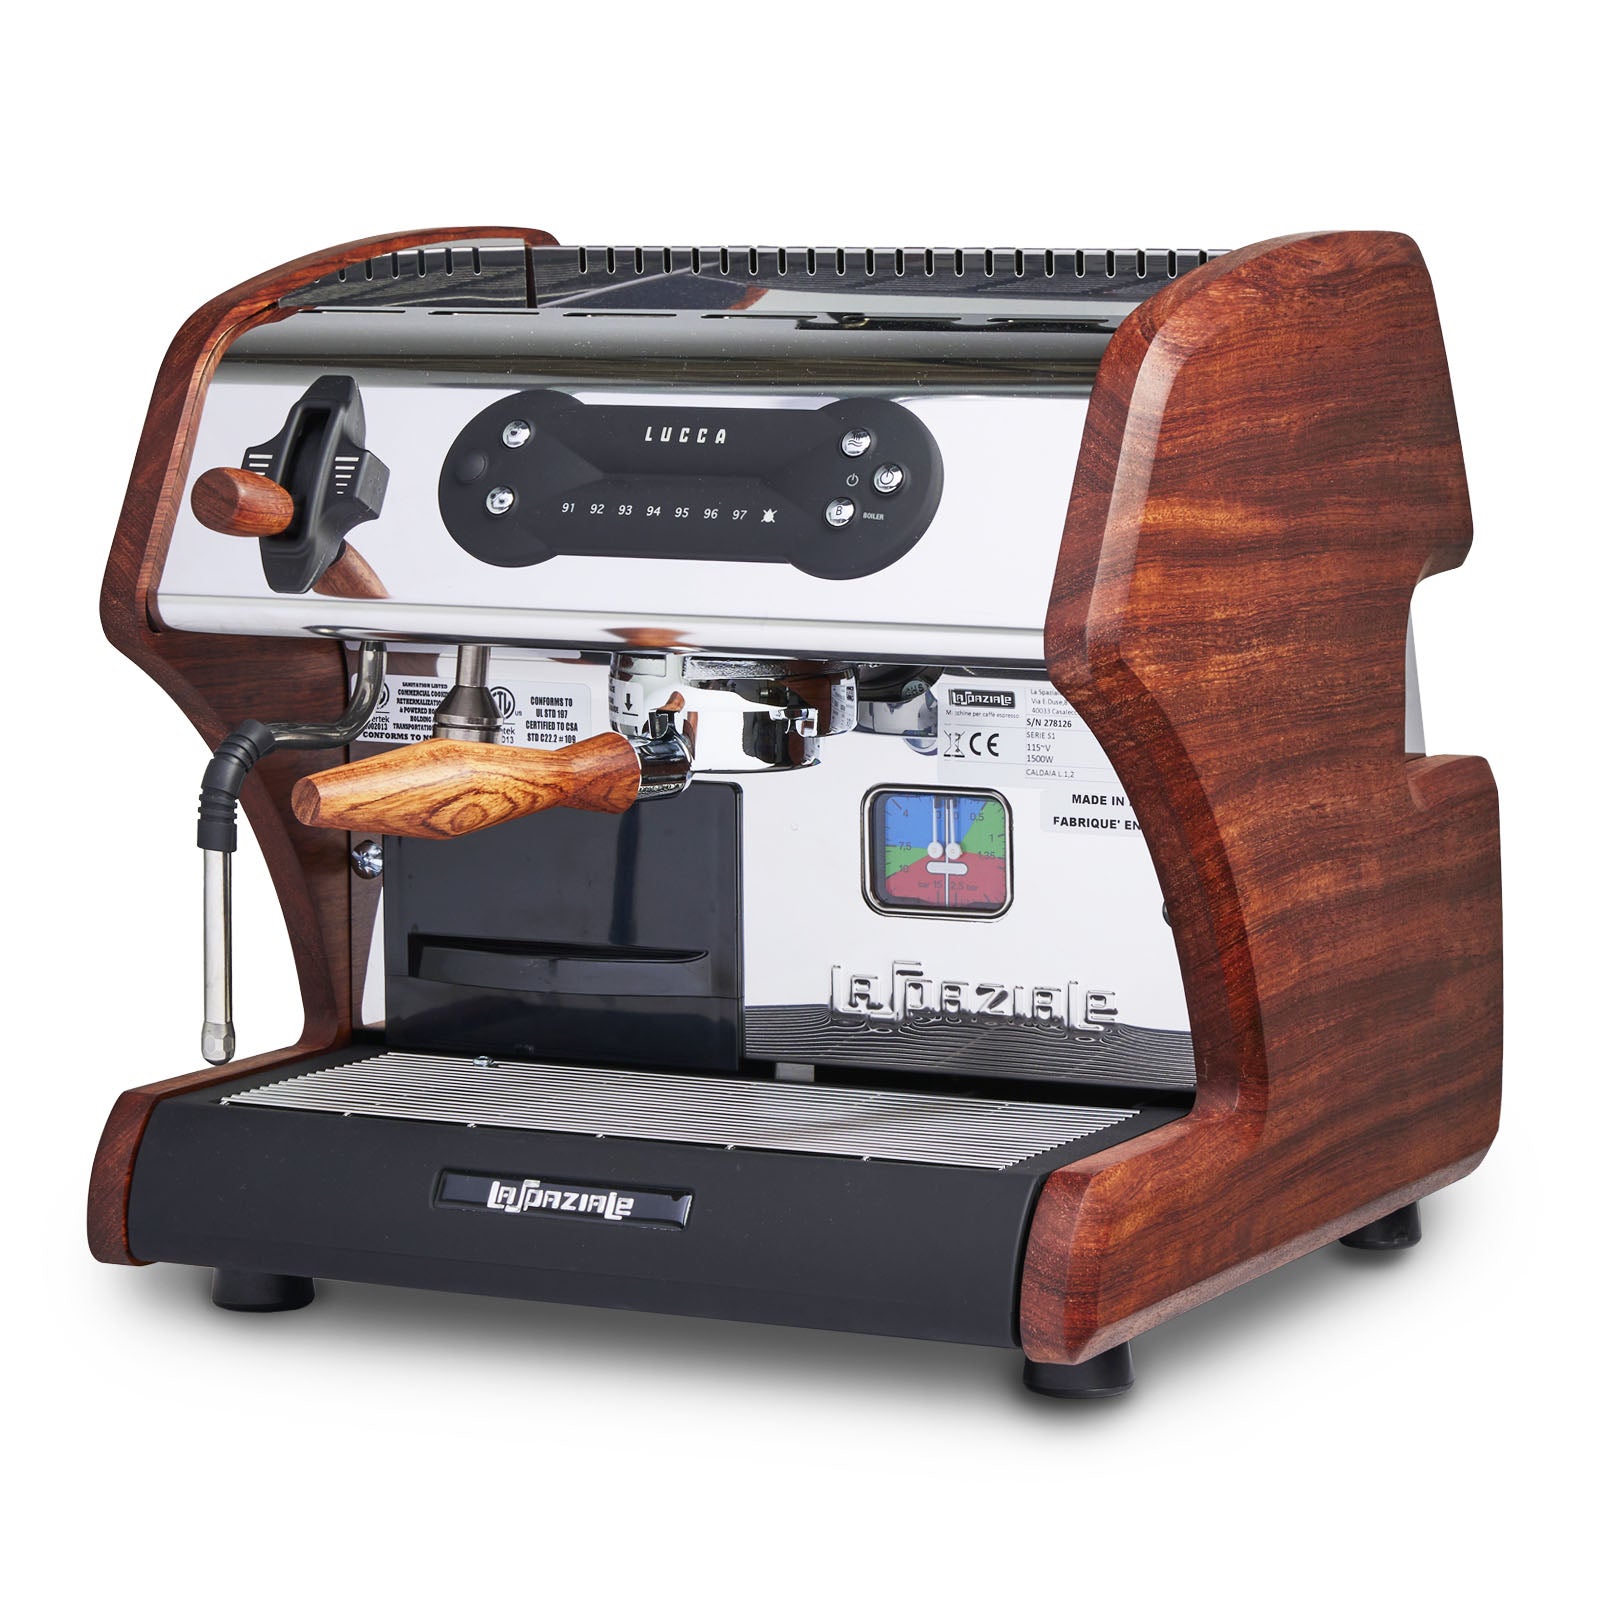 Lucca A53 Mini Espresso Machine by La Spaziale with bubinga side panels by Clive Coffee - Knockout (Bubinga)